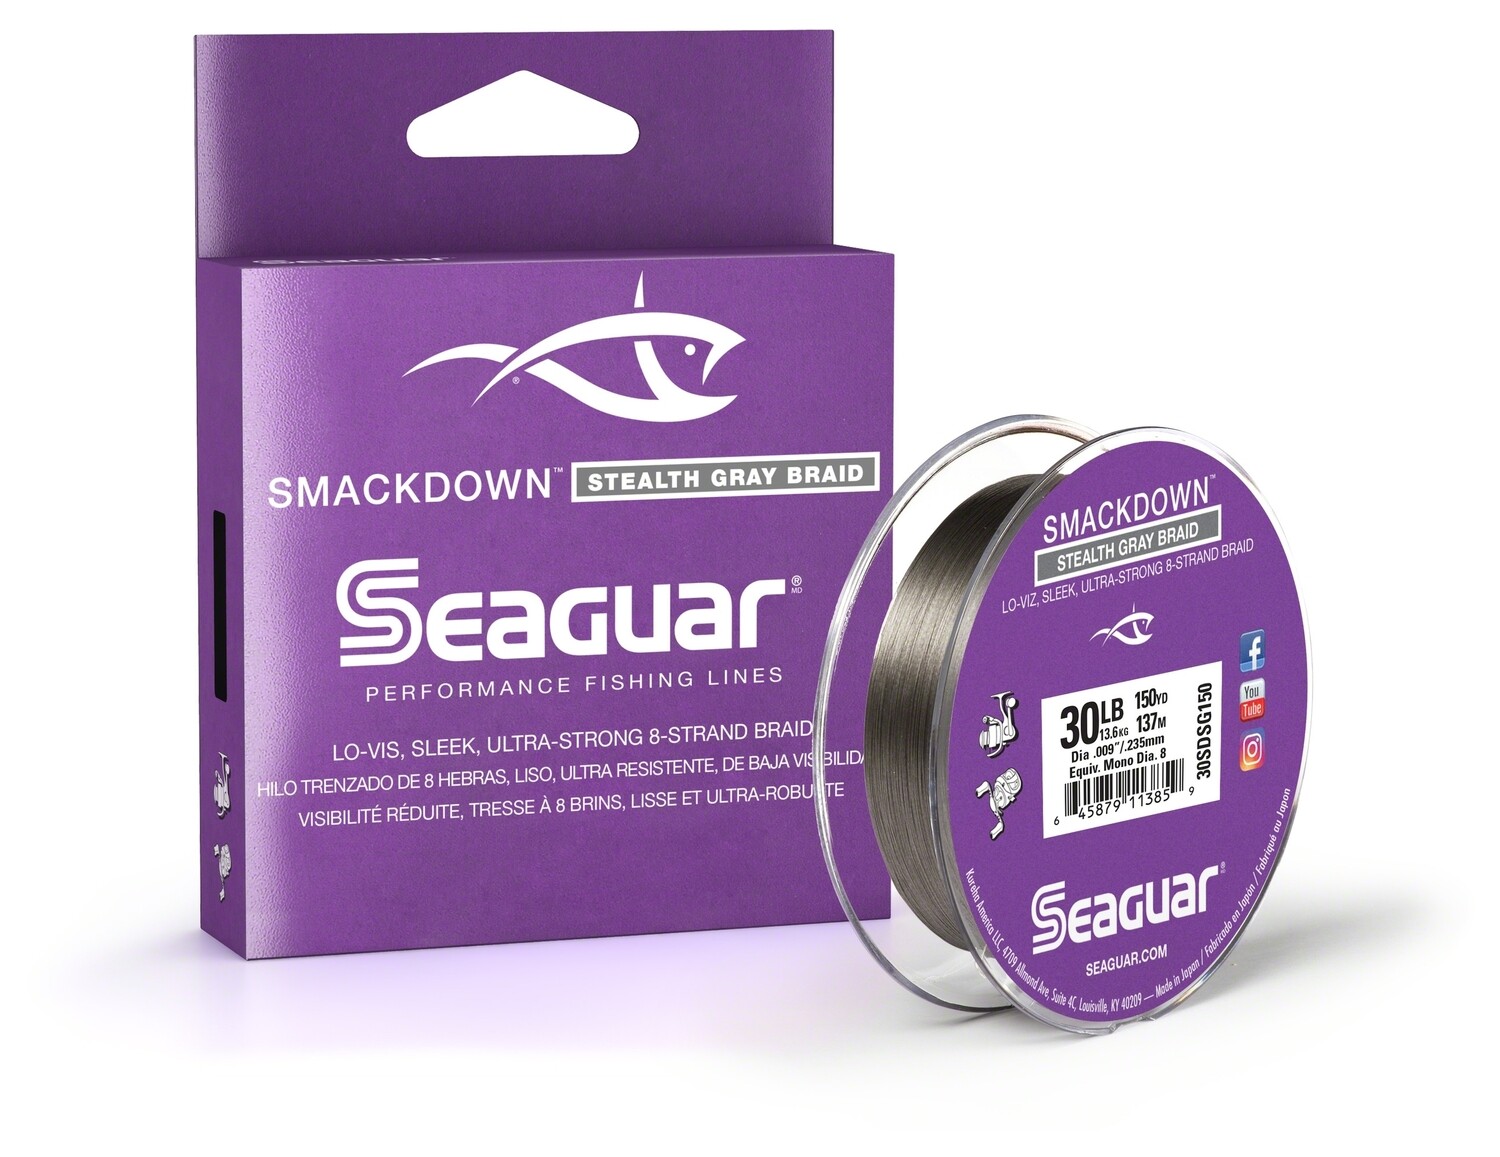 Seaguar Smackdown Braid 65 lb Stealth Gray 150 yd